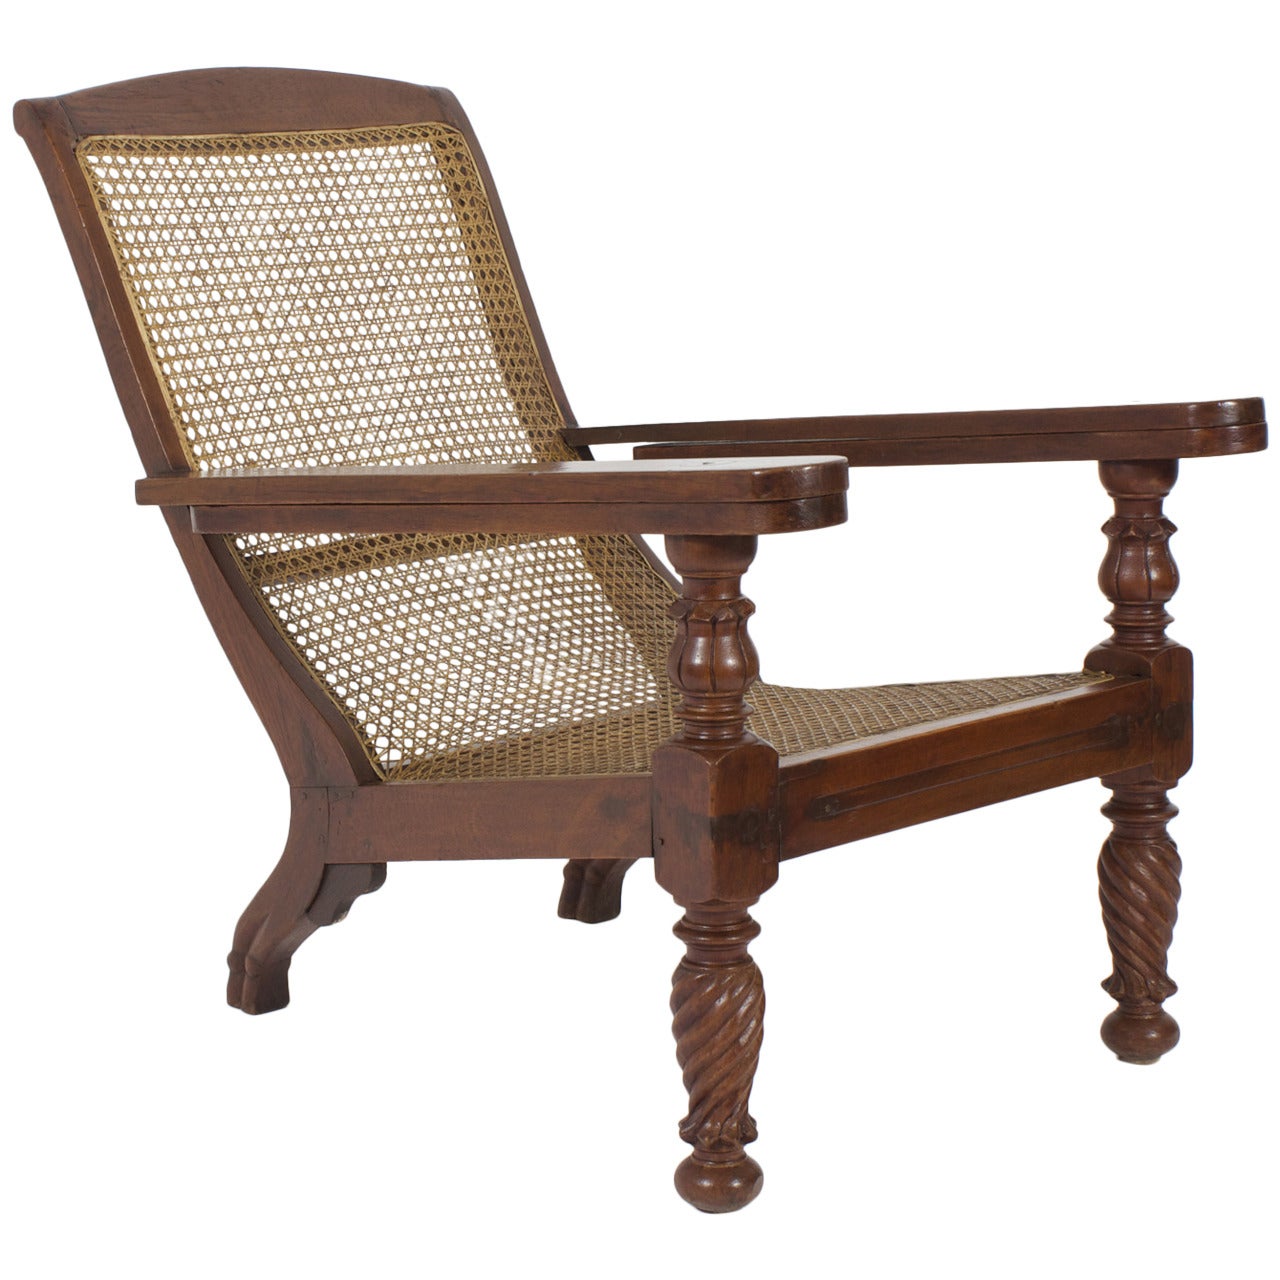 19th Century Anglo-Indian Mahogany Plantation Chair